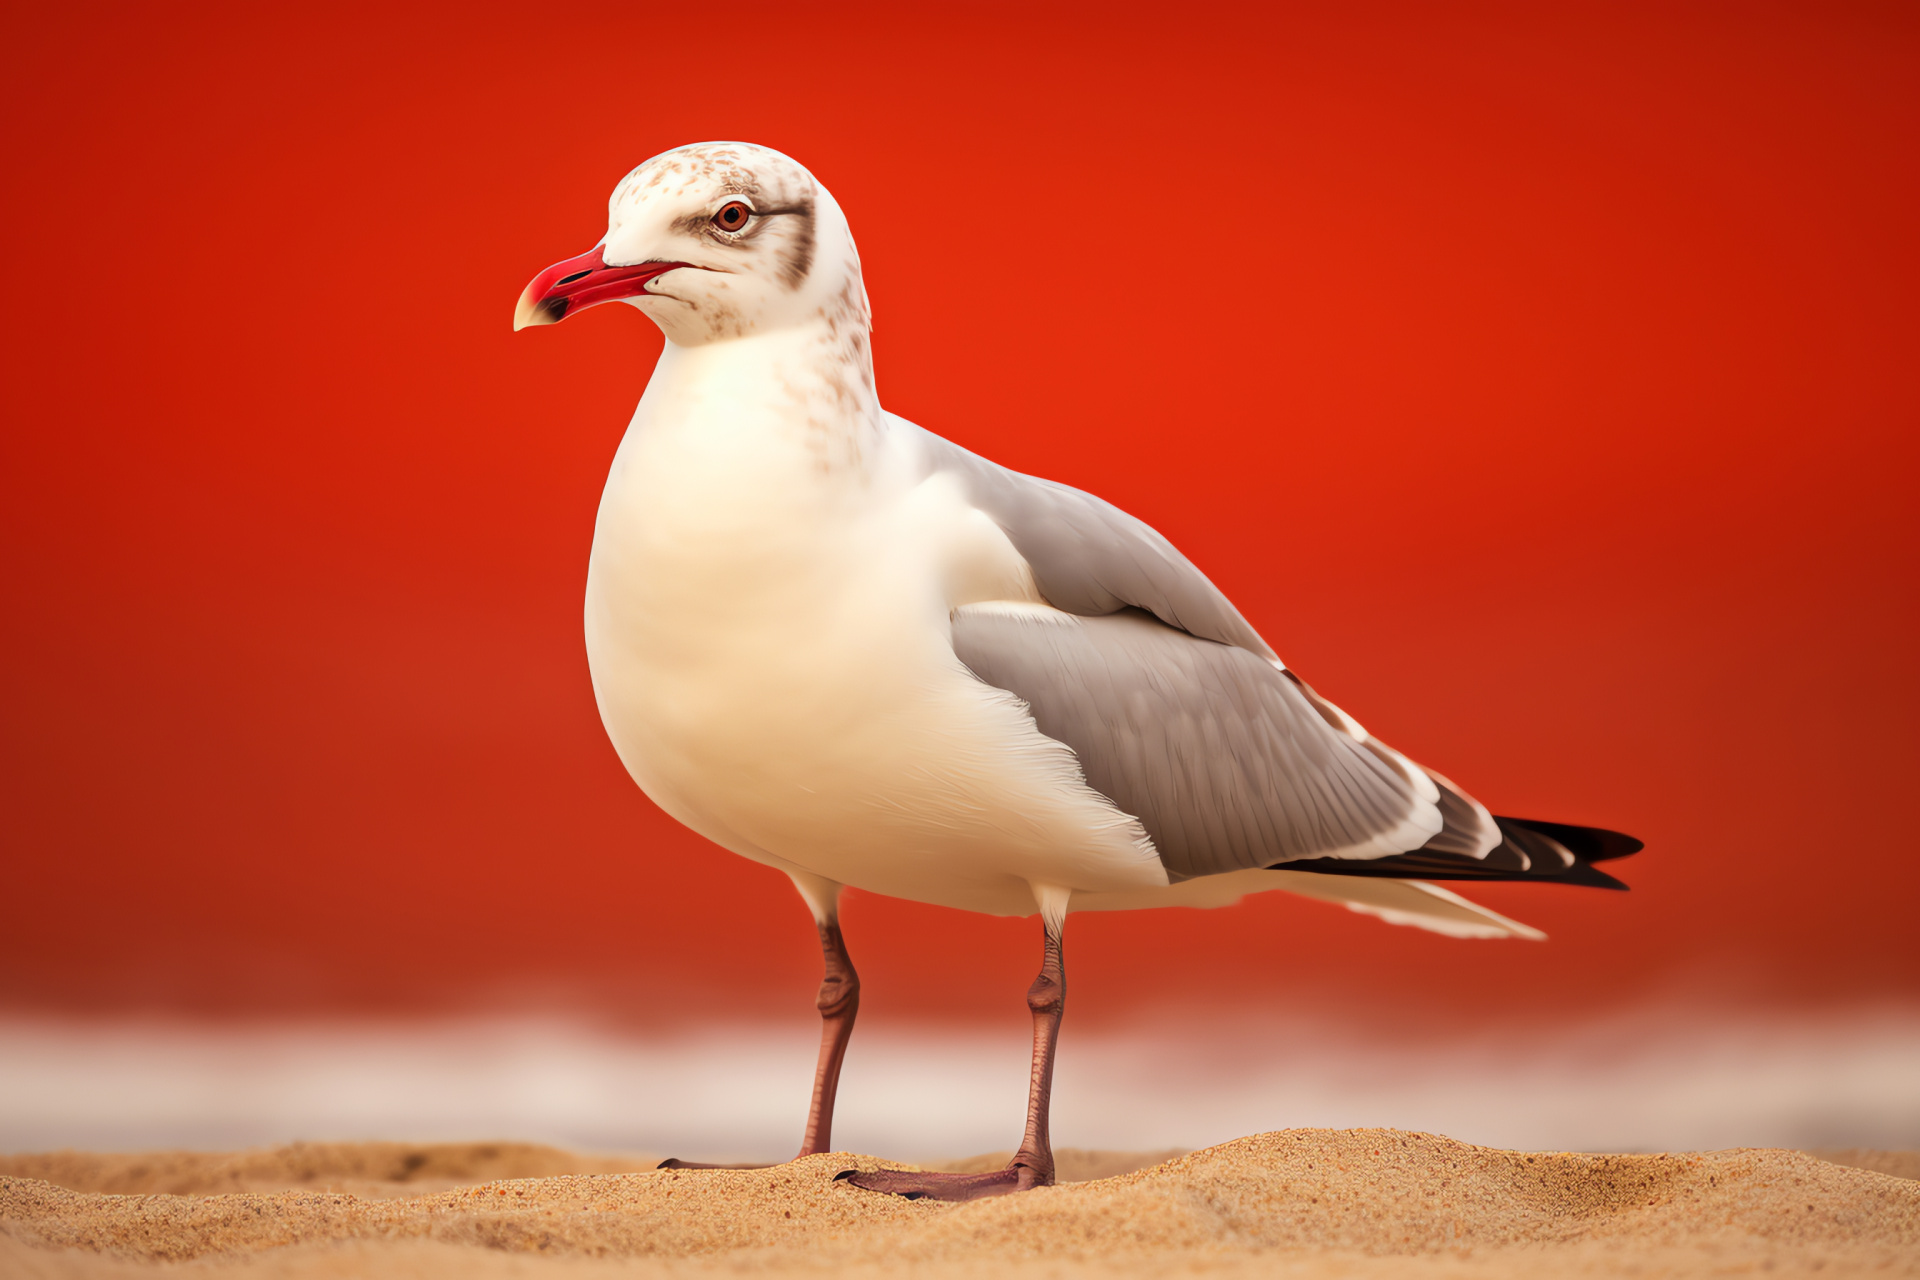 Gull over shoreline, feathered seabird, coastal avian behavior, sunset beach scene, eye color detail, HD Desktop Image